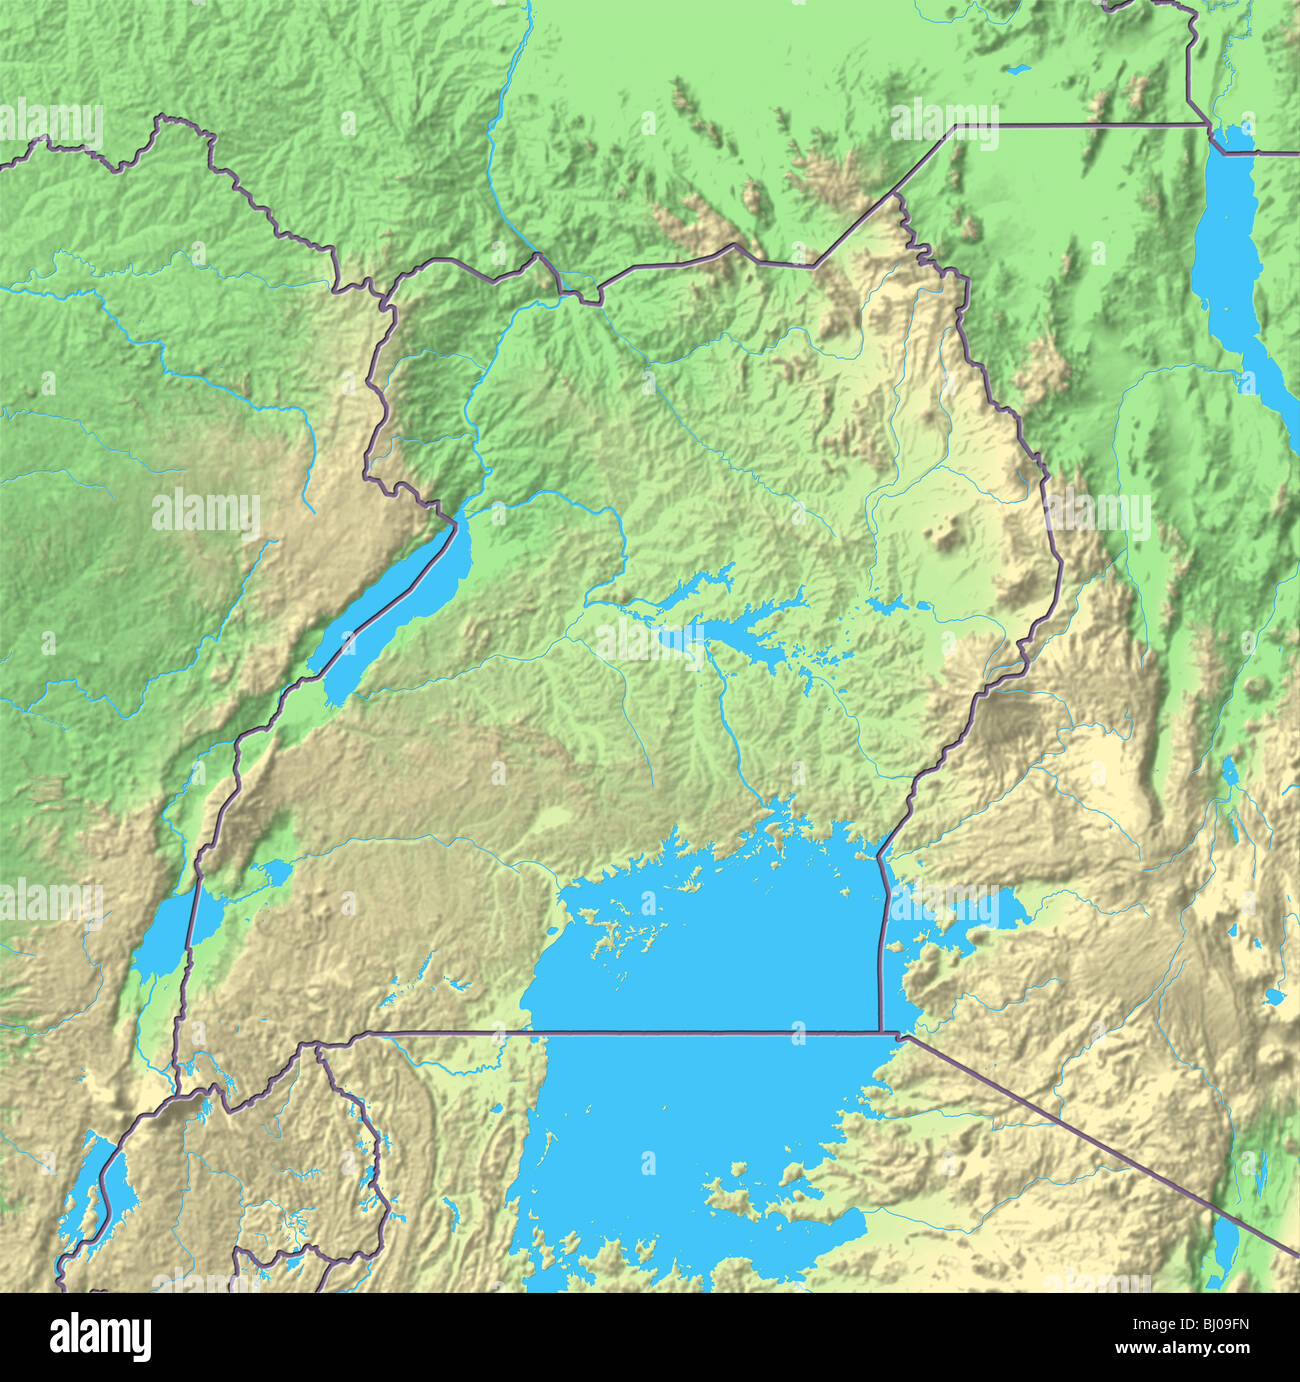 Uganda, shaded relief map. Stock Photo